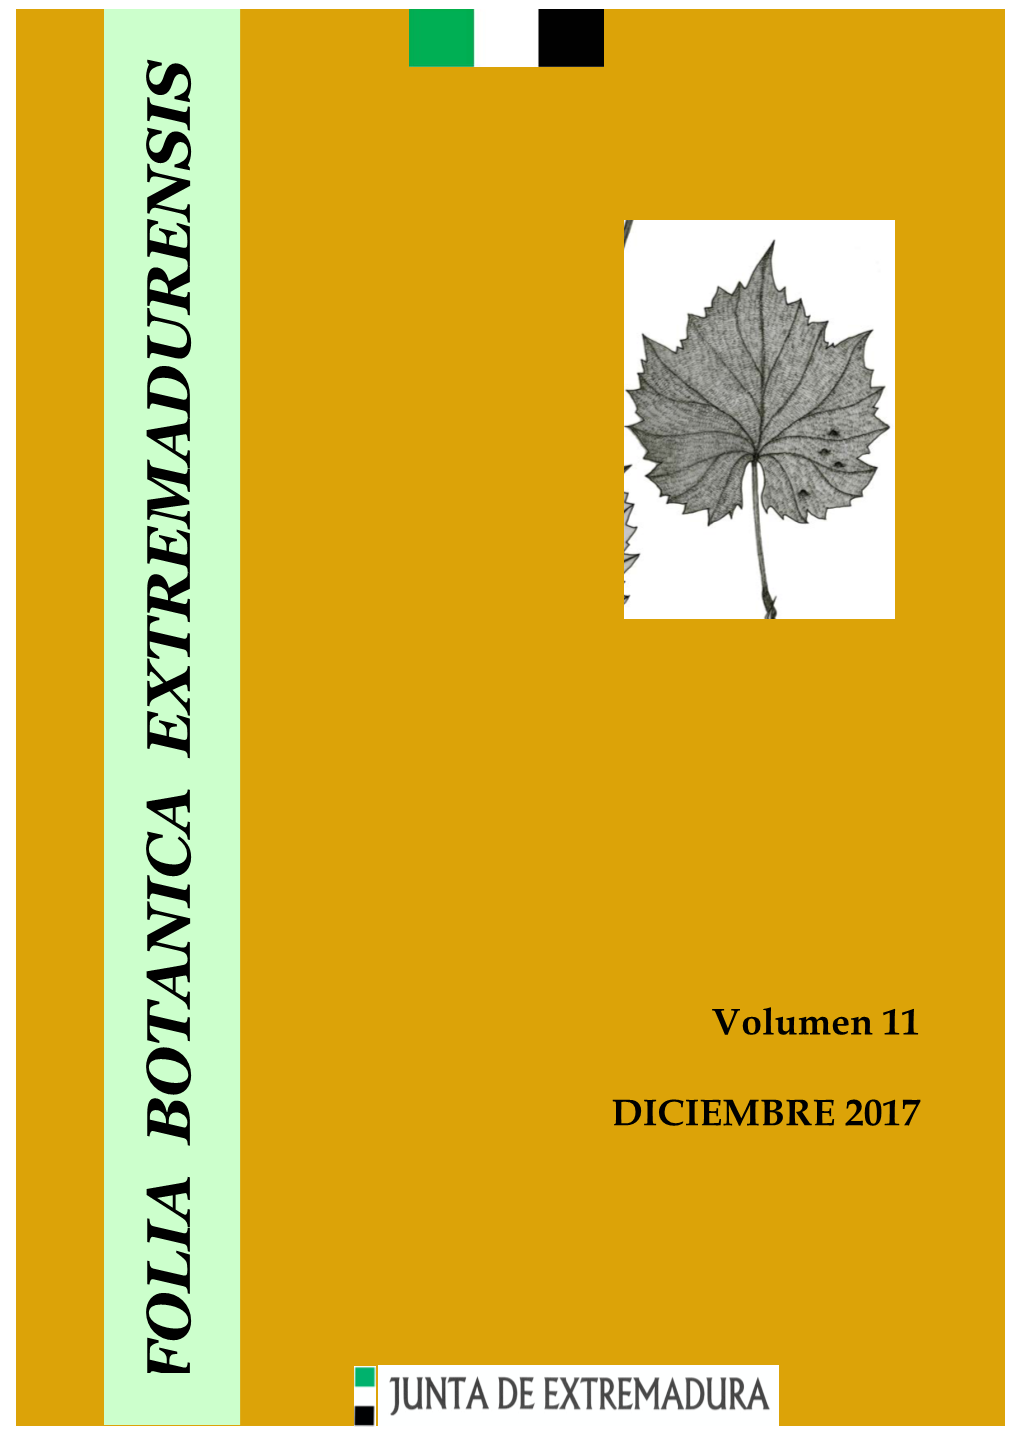 Folia Botanica Extremadurensis, 11 (2017)